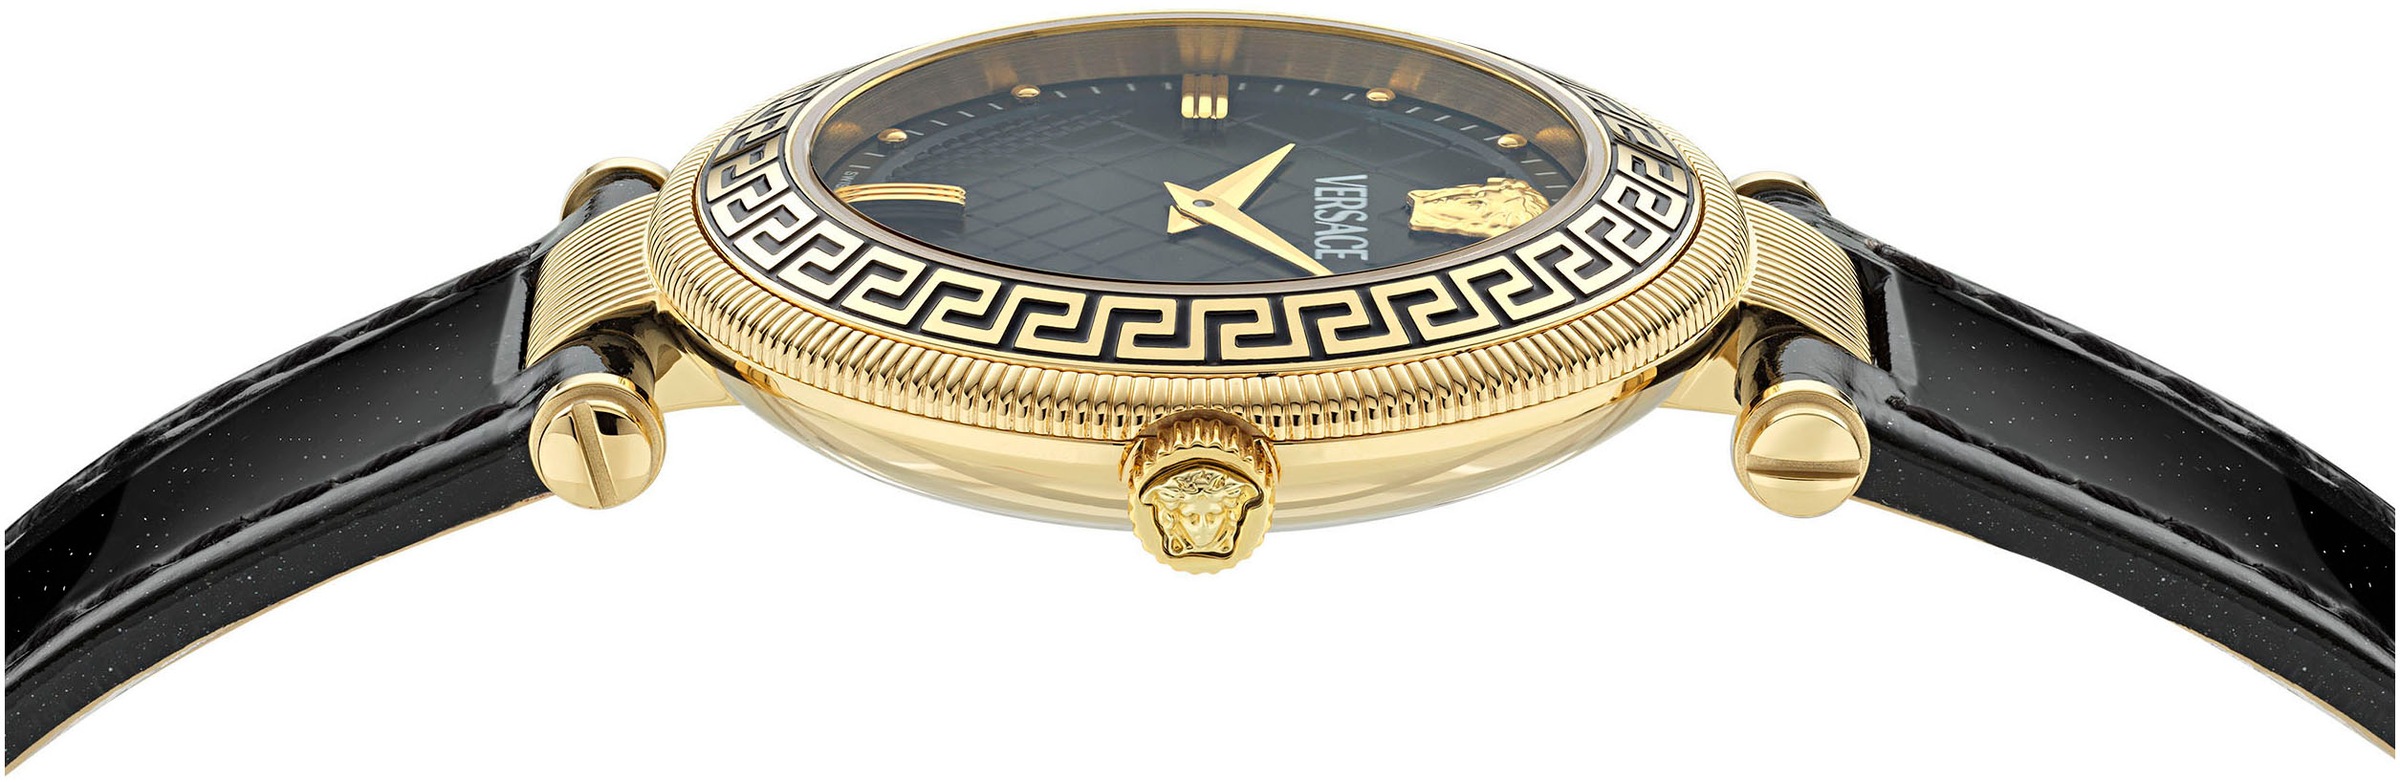 Versace Quarzuhr »REVE«, Armbanduhr, Damenuhr, Saphirglas, Swiss Made, analog